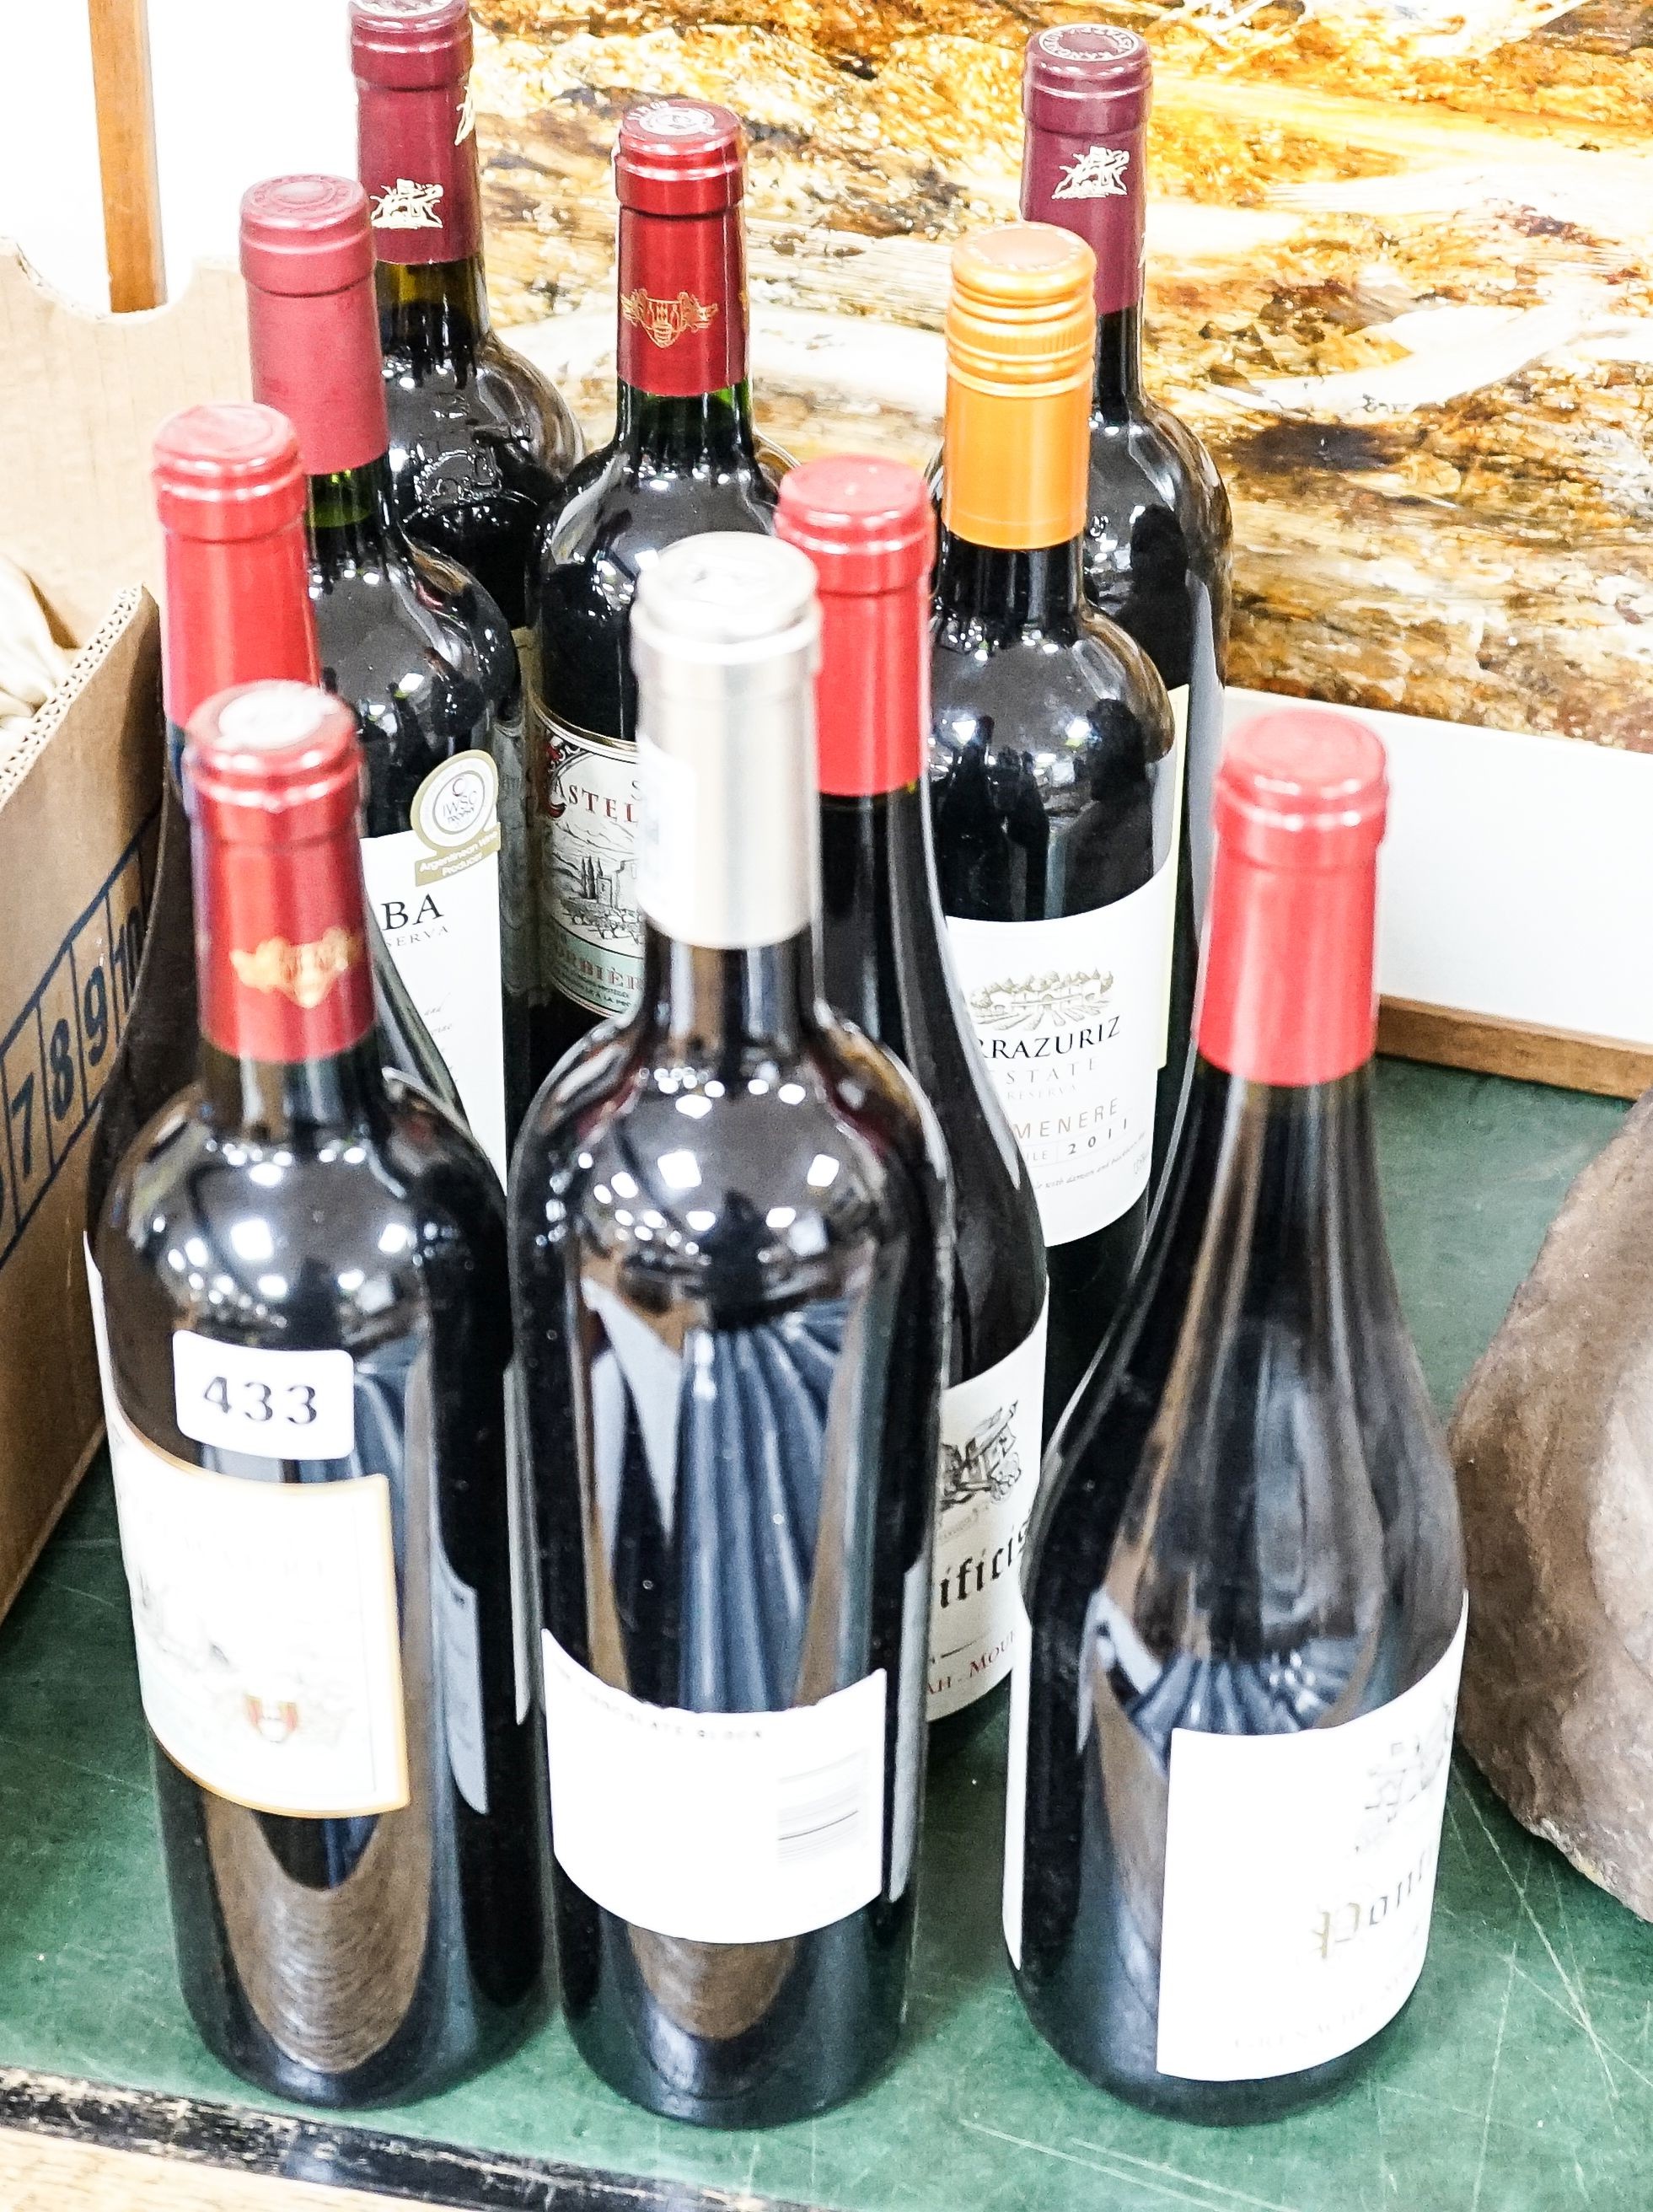 10 bottles various red wines